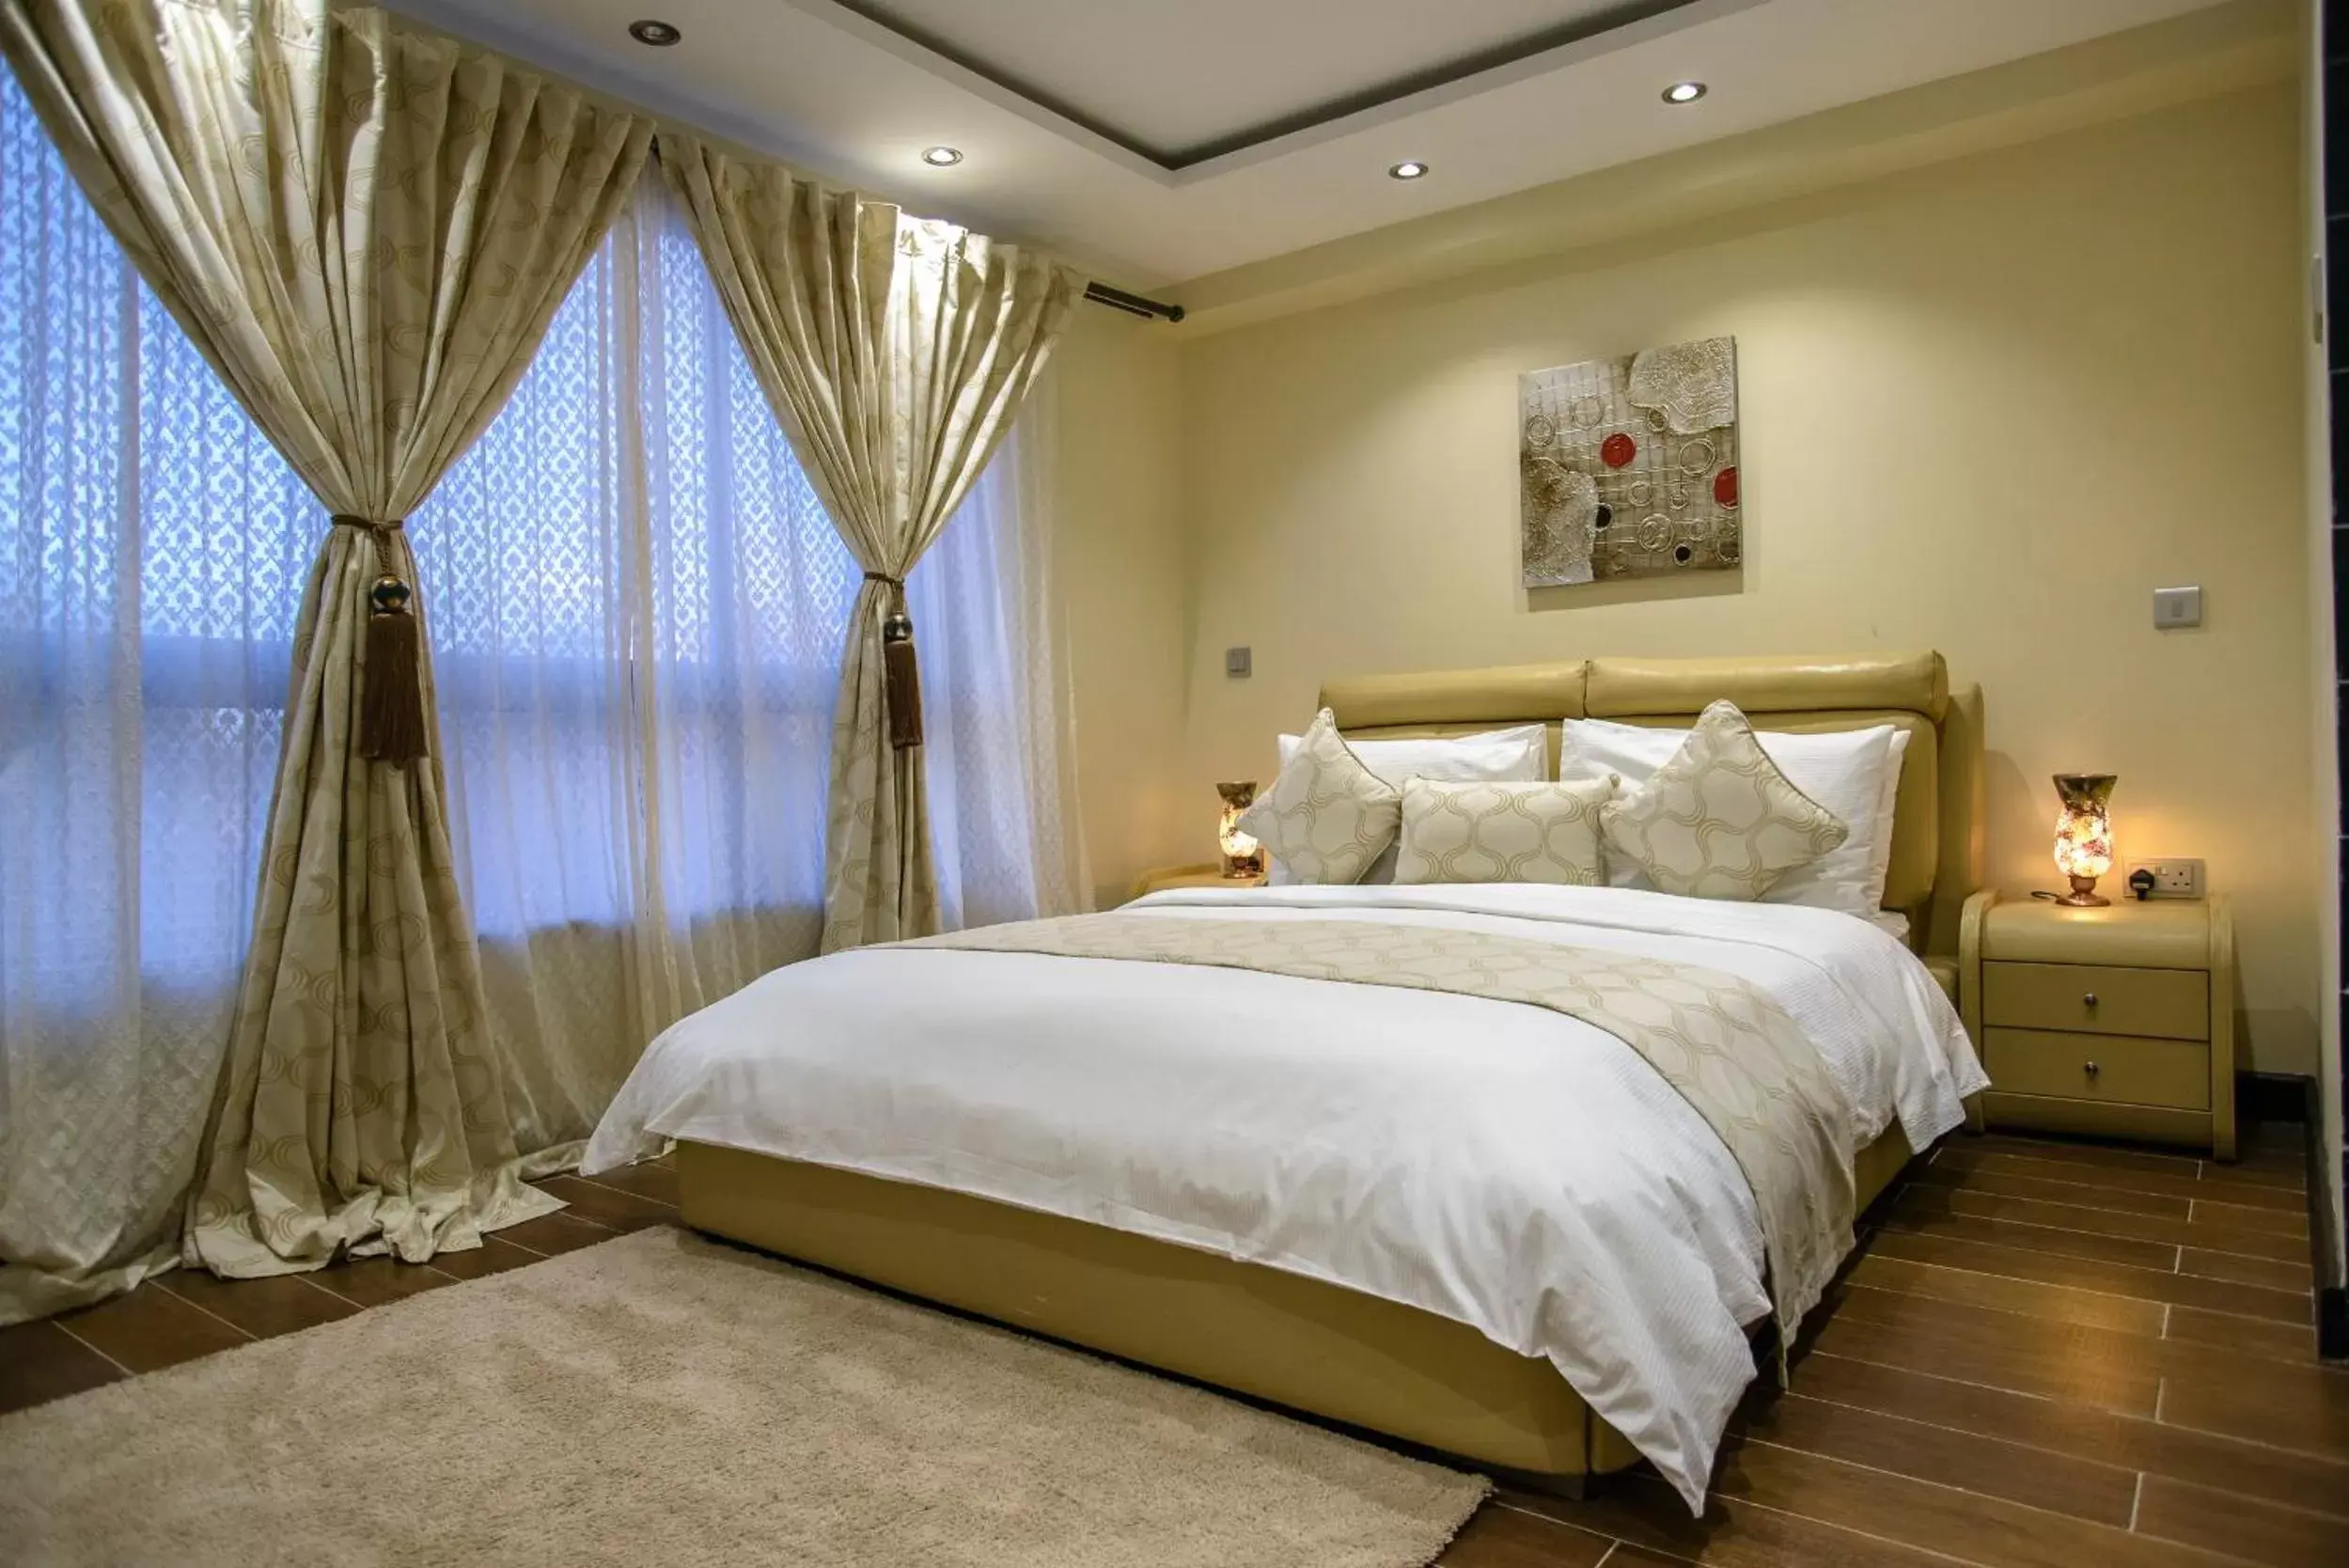 Bed, Room Photo in The Landmark Suites